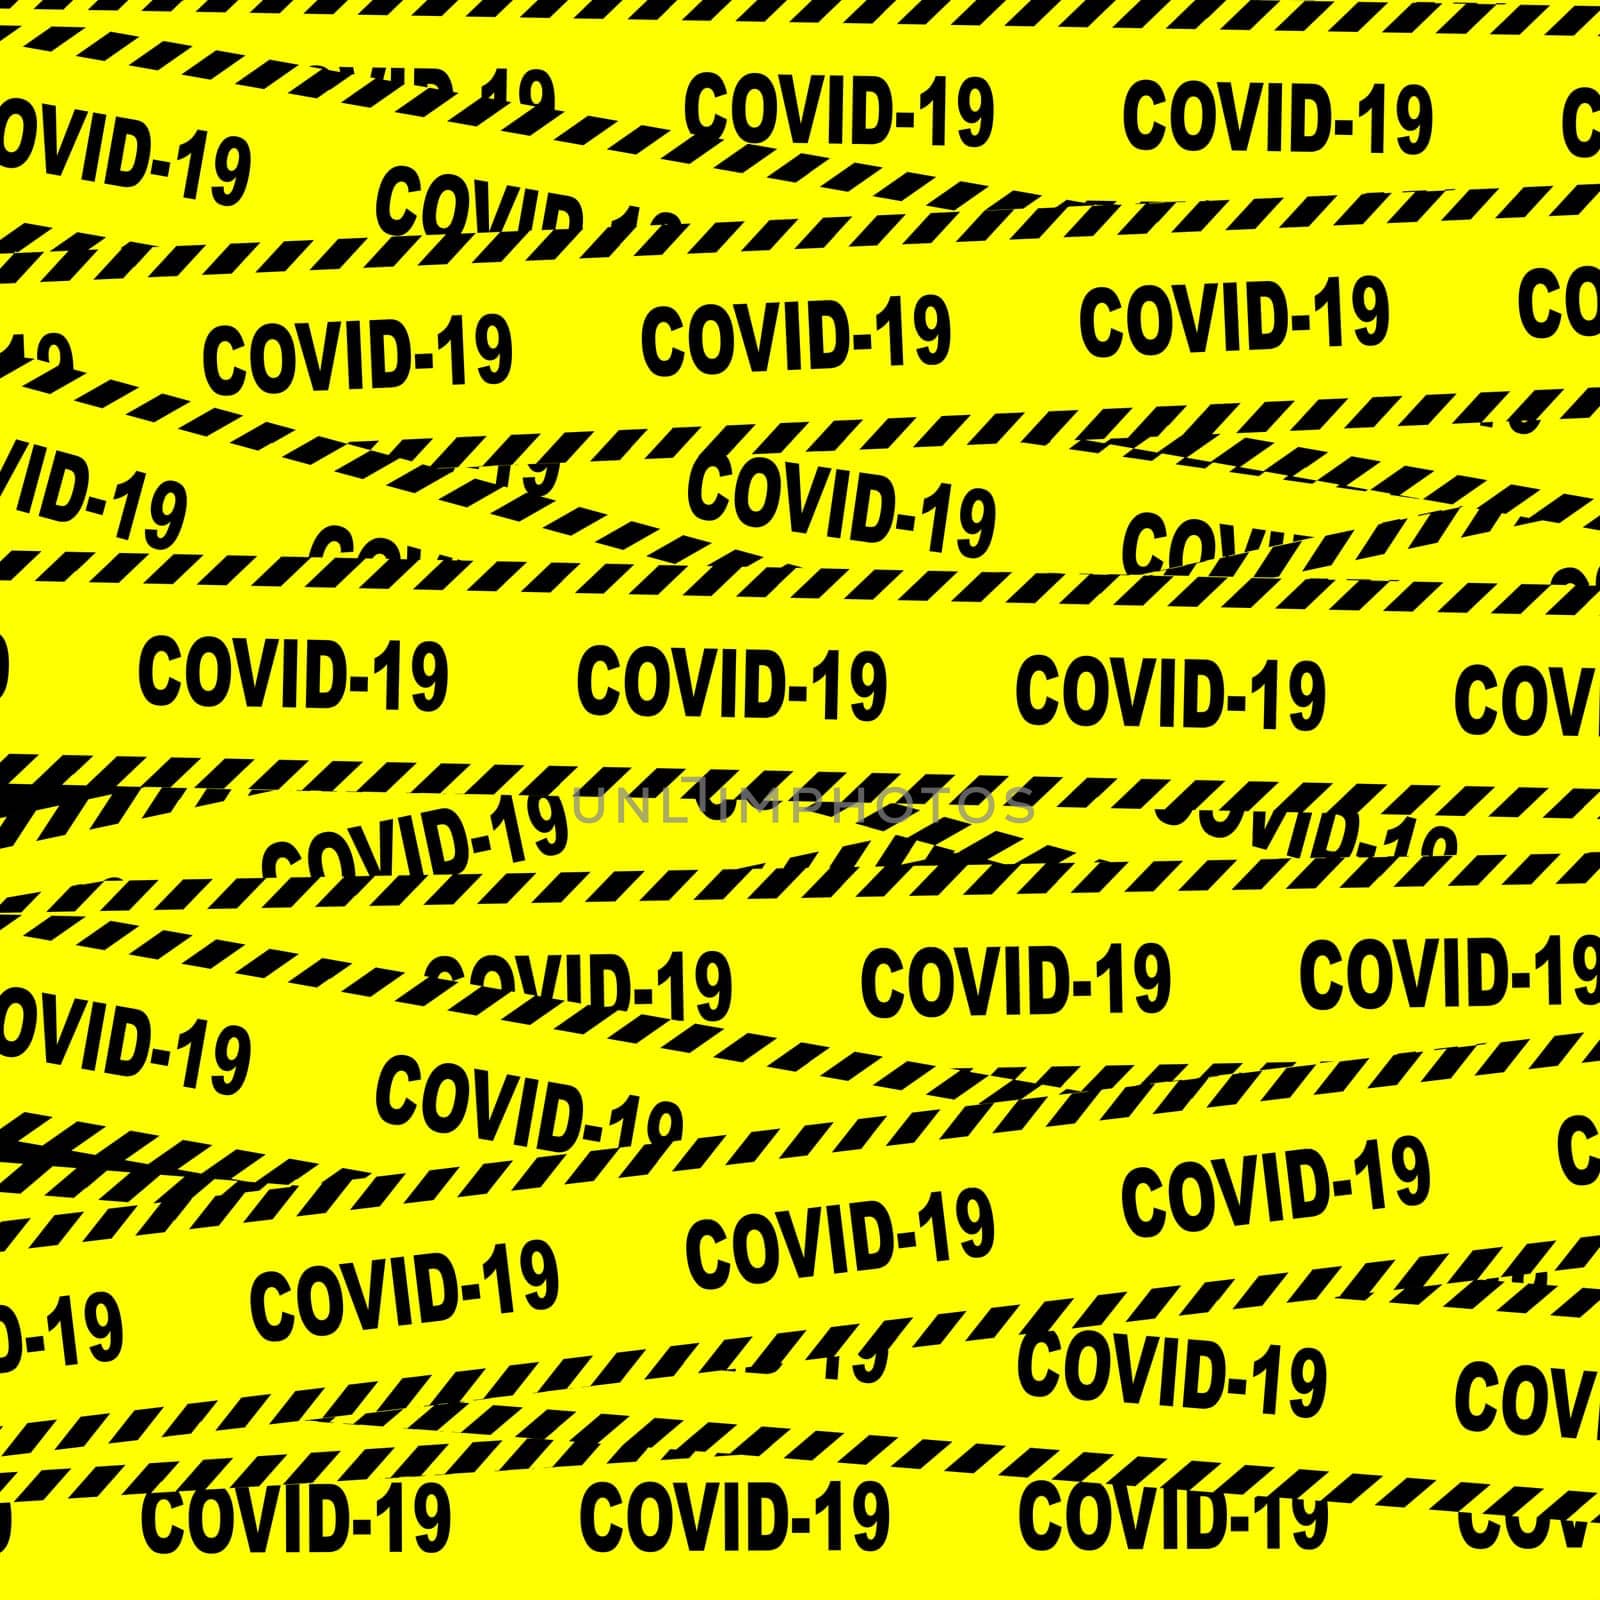 Covid-19 Lockdown Tape by Bigalbaloo